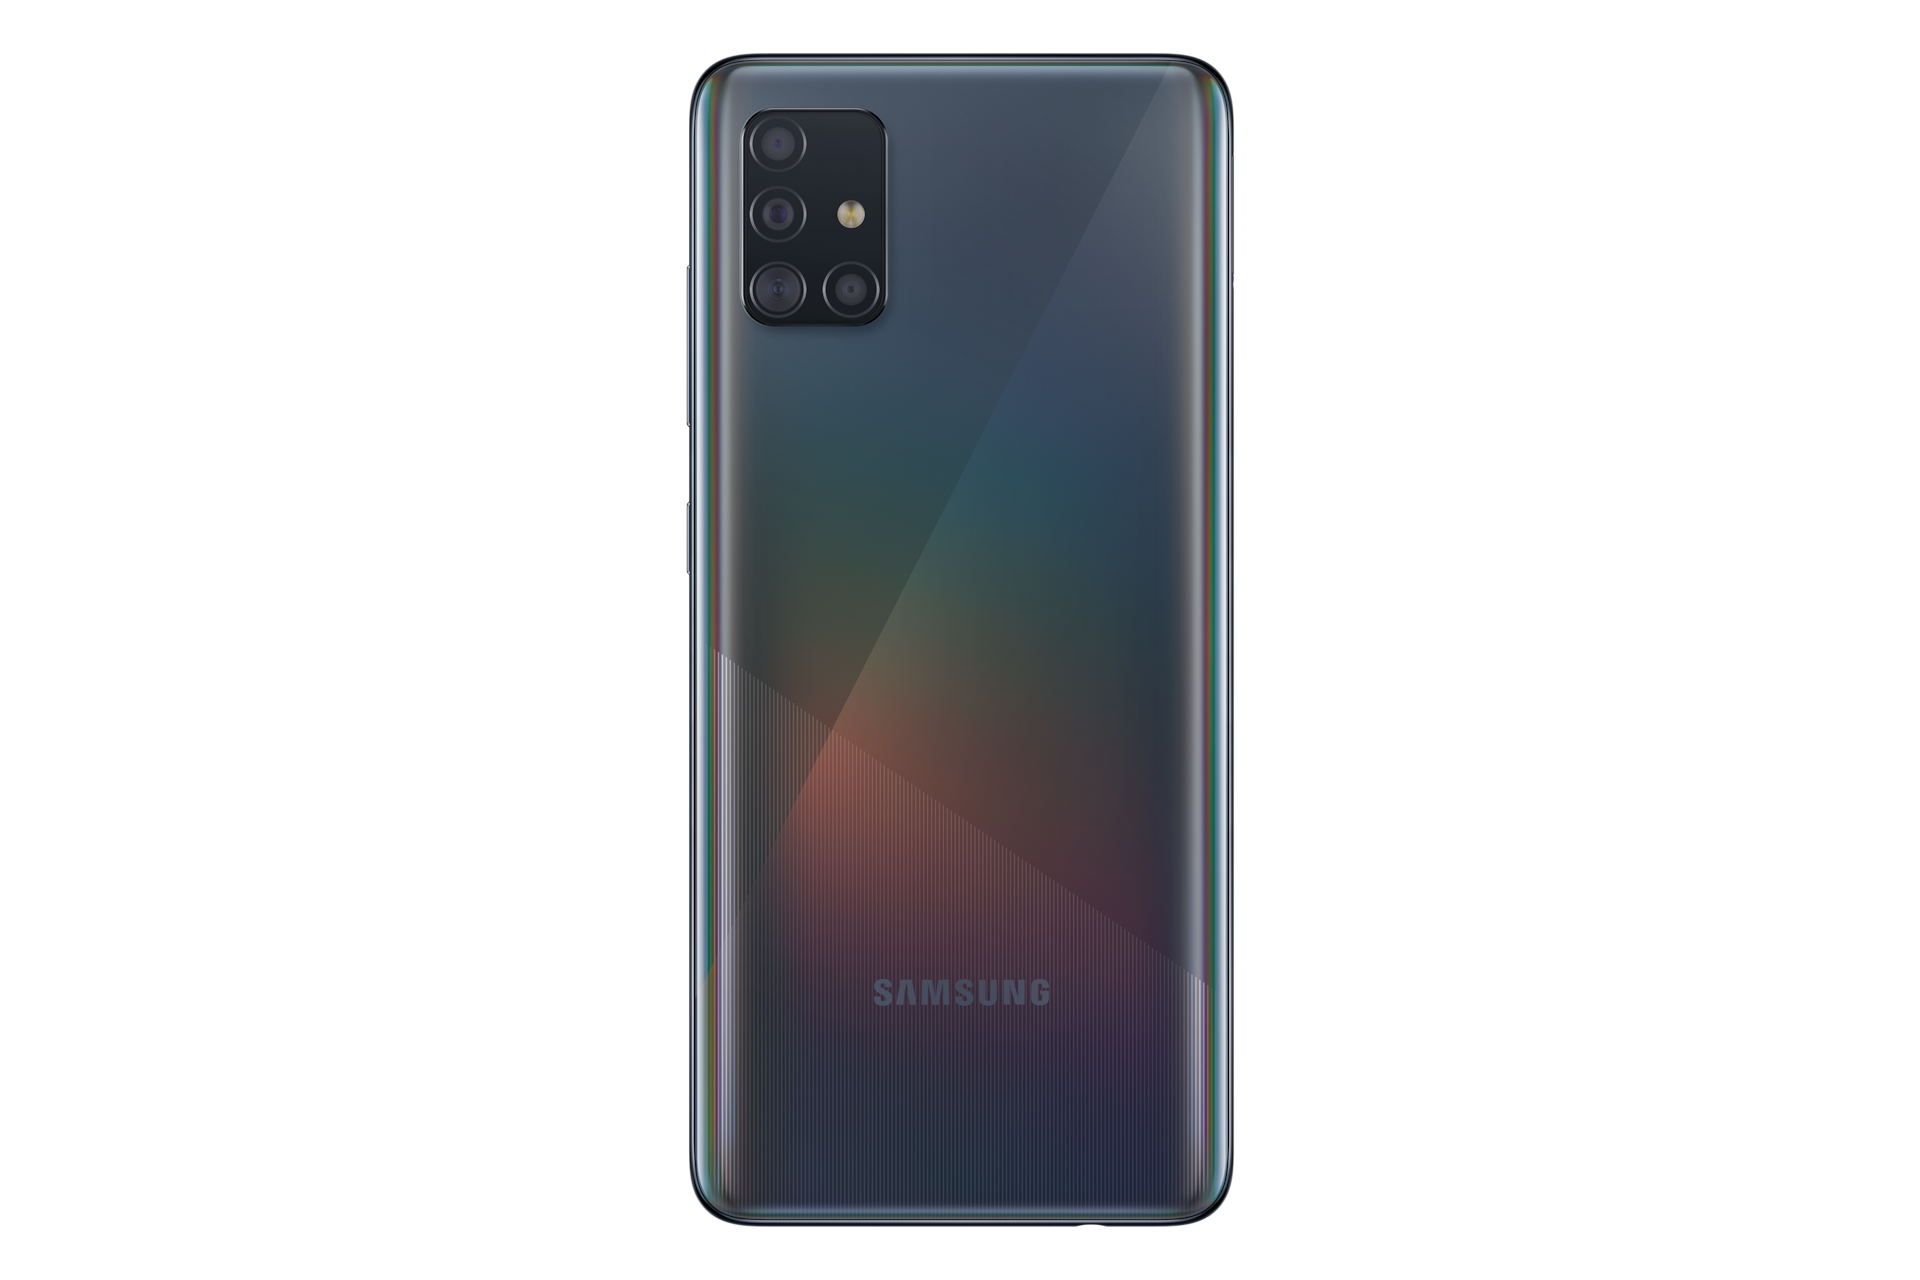 Galaxy A51, SM-A515FZKEXFE